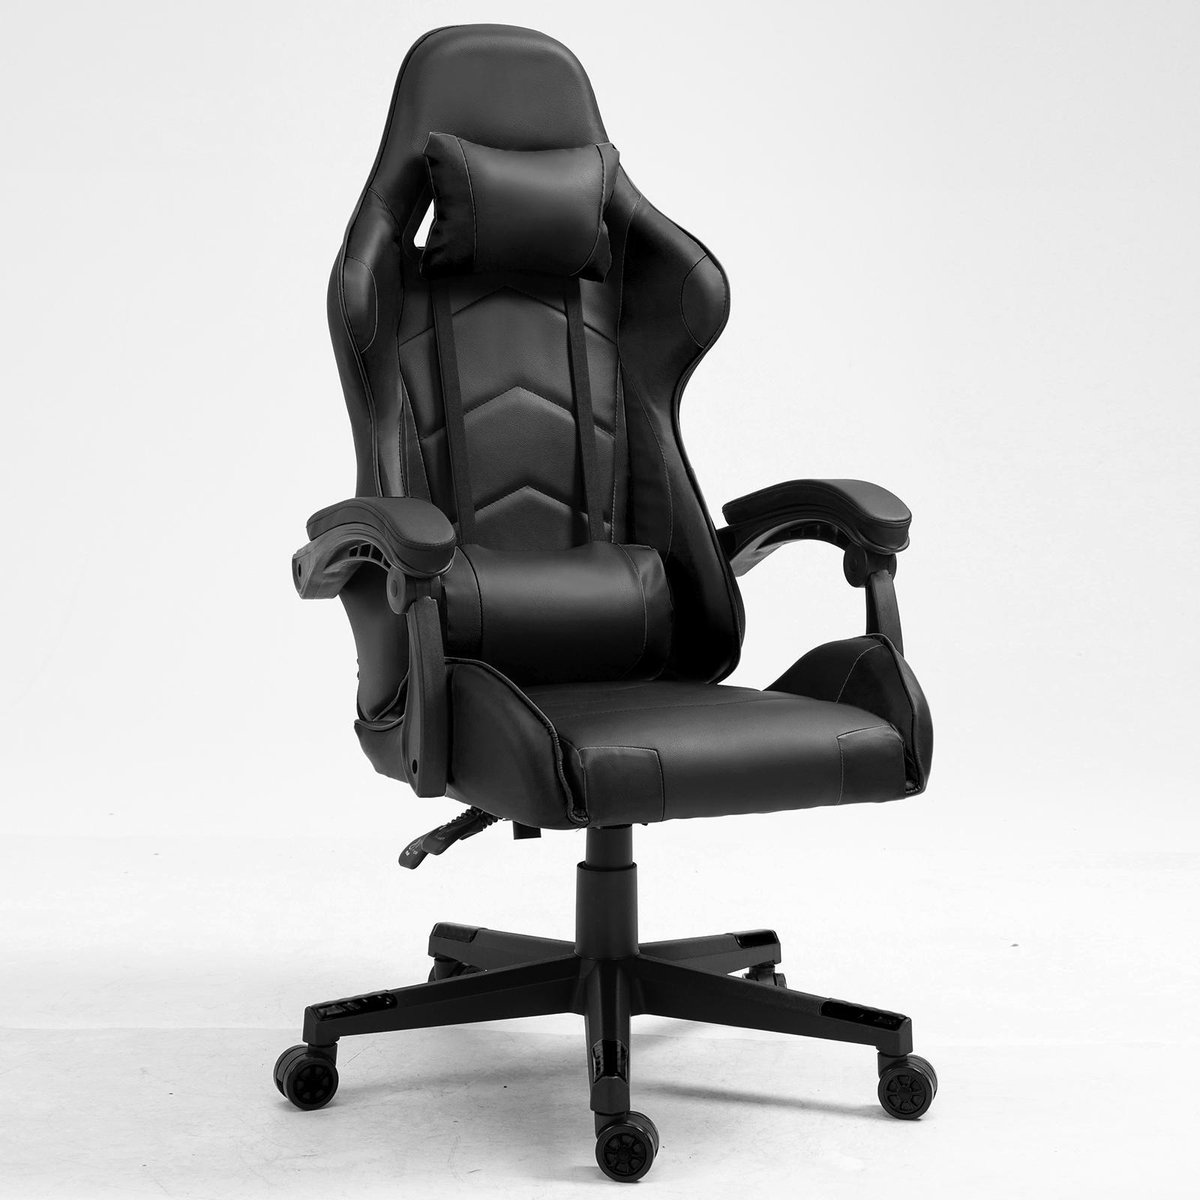 Alora Gaming stoel X-TREME - Zwart - Met Nekkussen & Verstelbaar Rugkussen - Kunstleer - Gamestoel - Game Stoel - Gaming chair - Bureaustoel - Office Chair